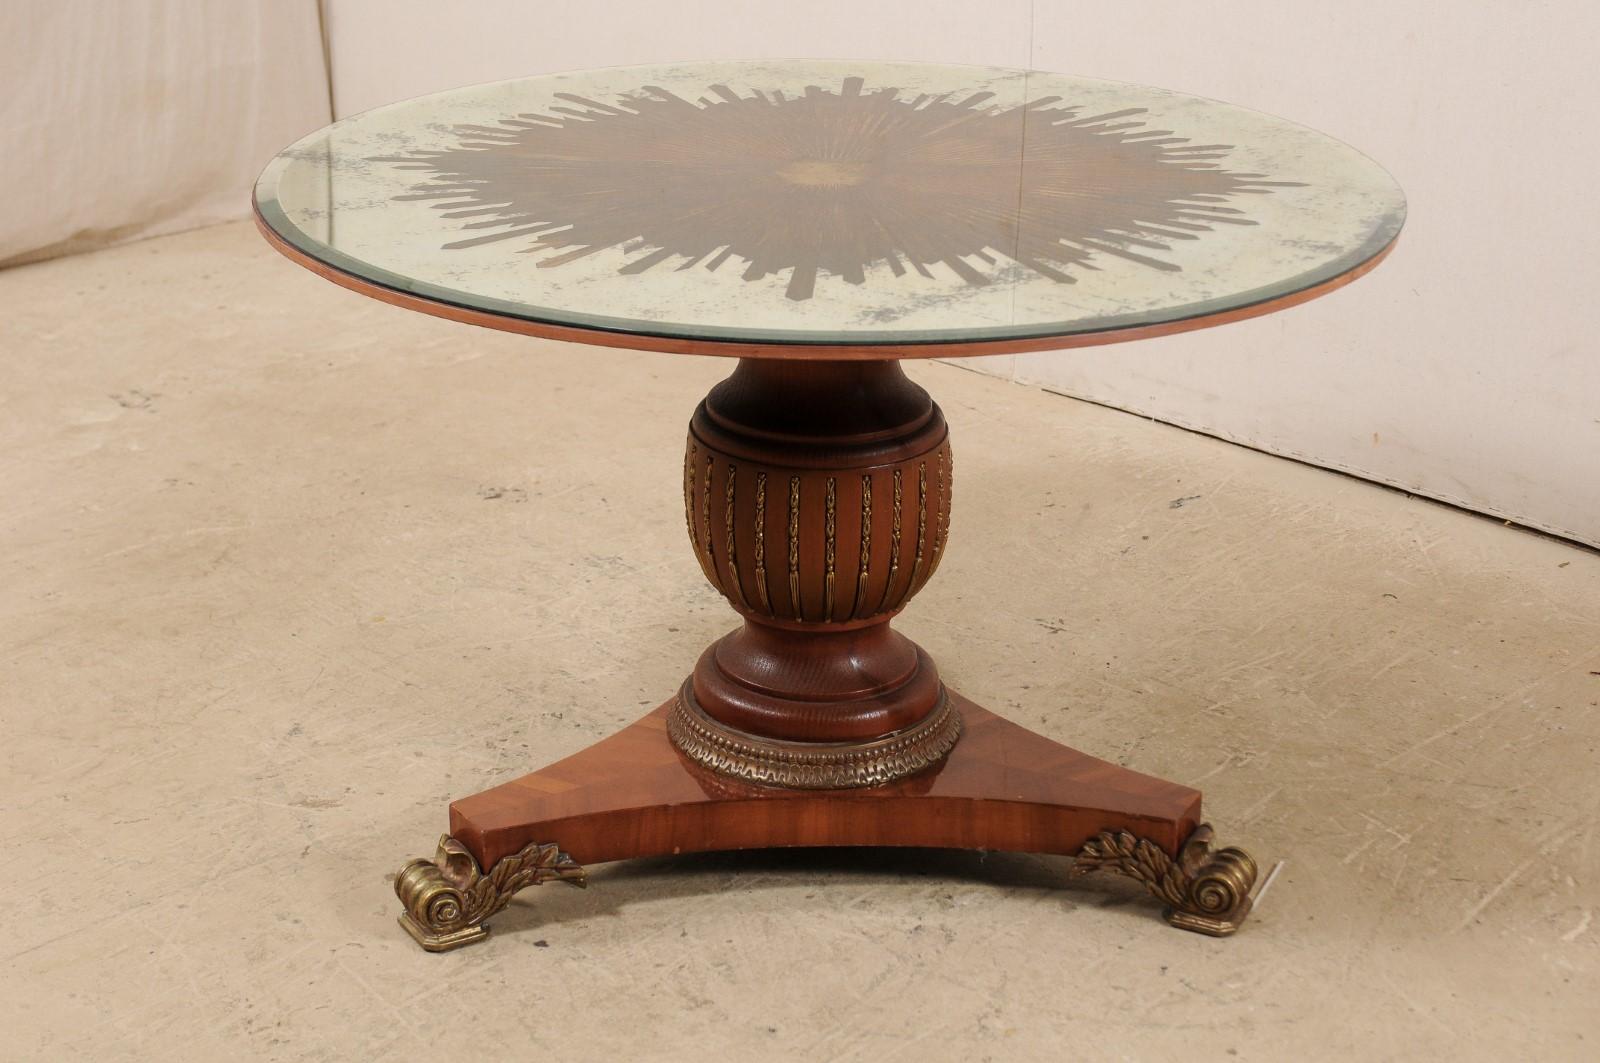 American Custom Table with Verre Églomisé Sunburst Mirror Top over Carved Pedestal Base